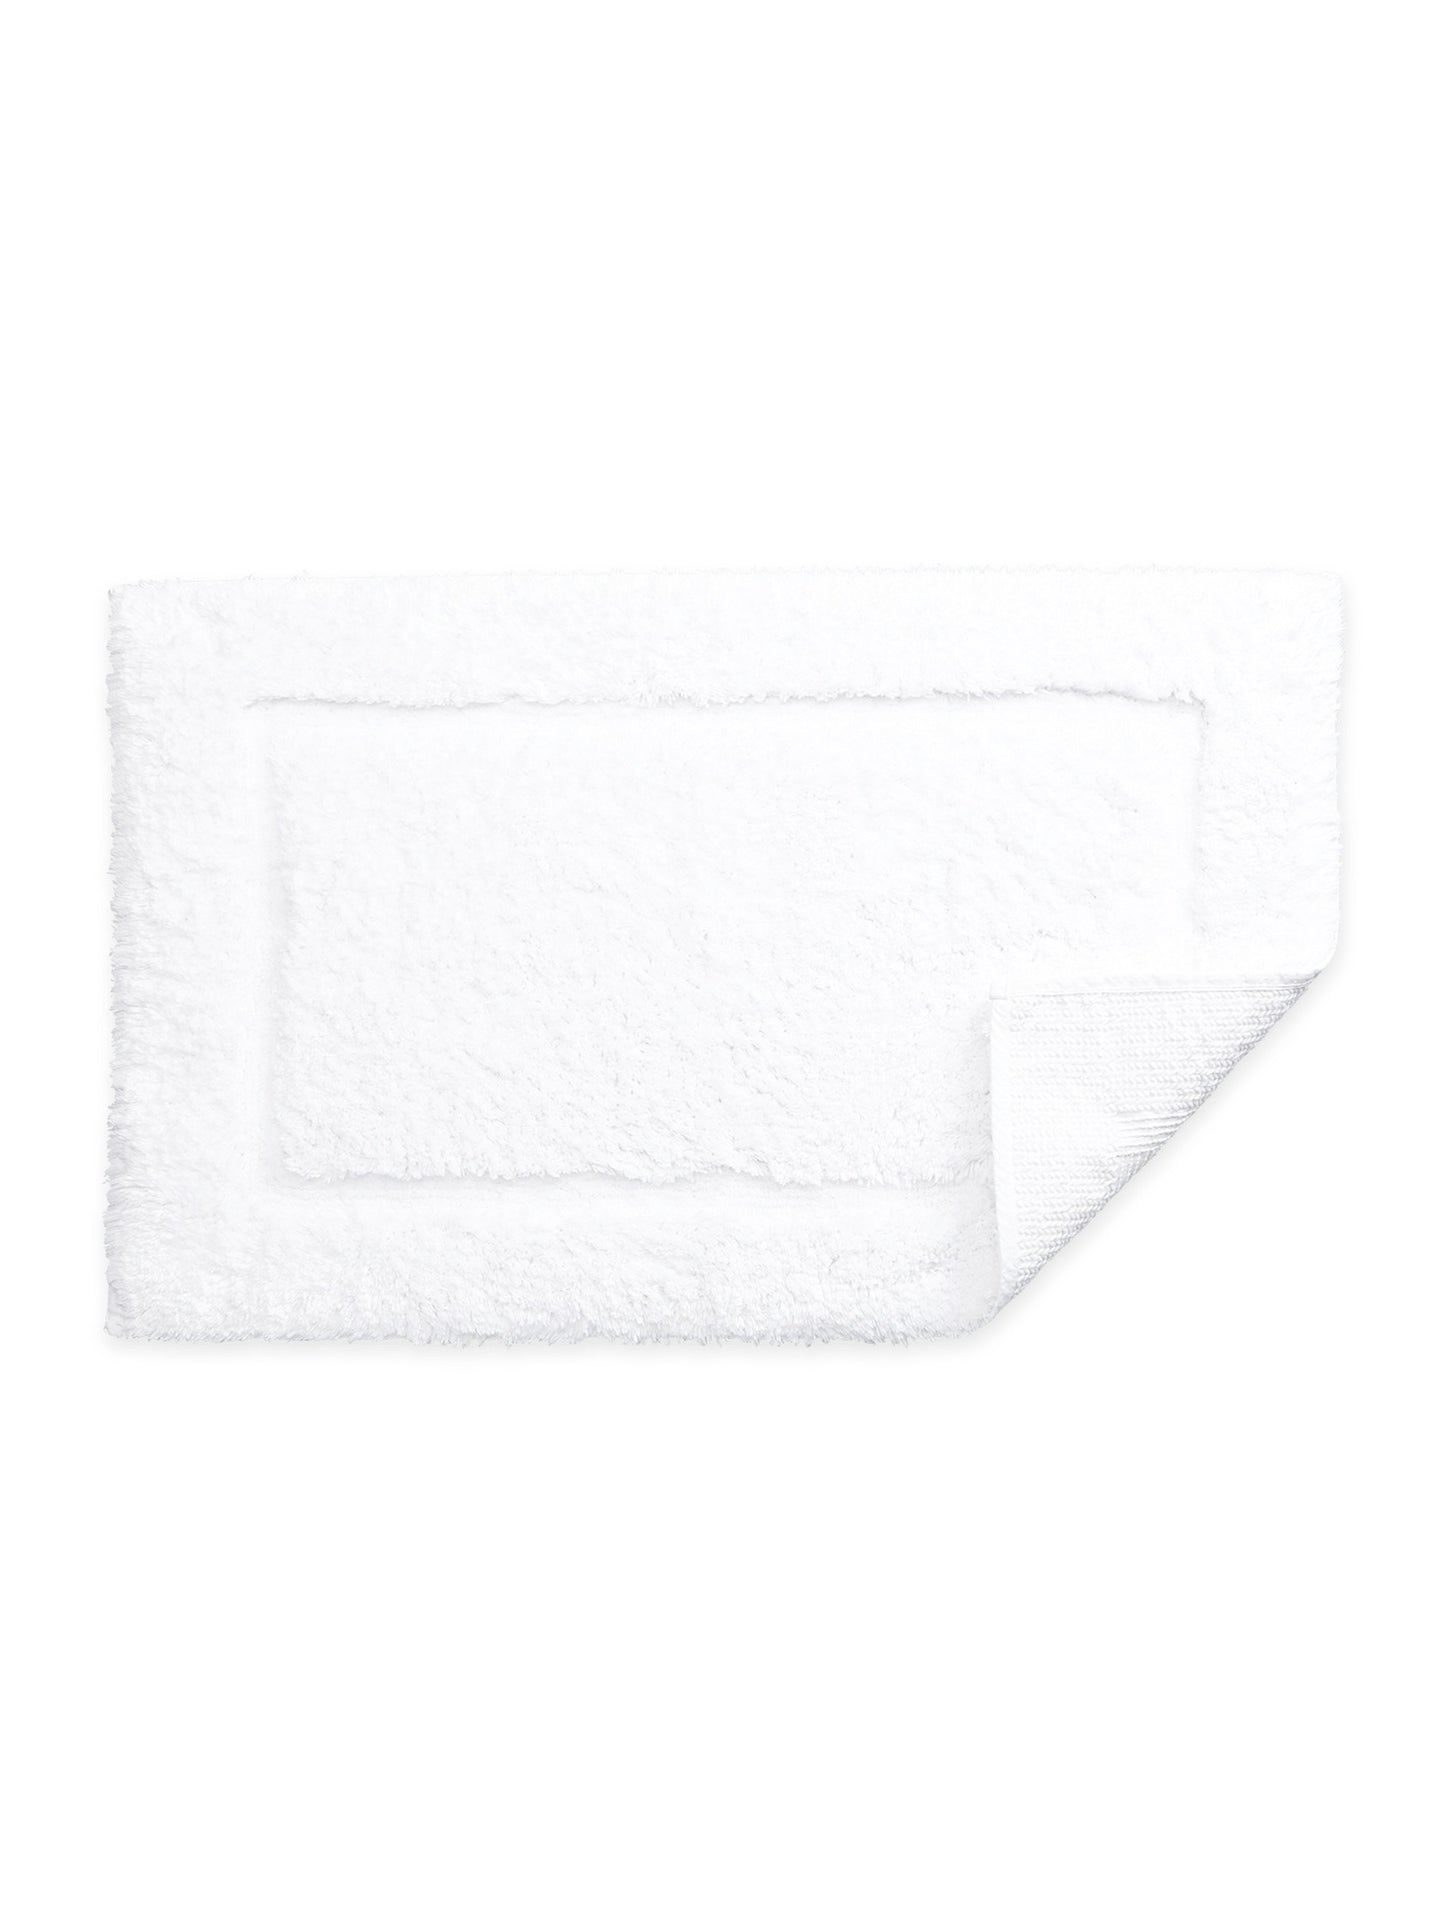 Matouk Milagro Bath Towels (White)